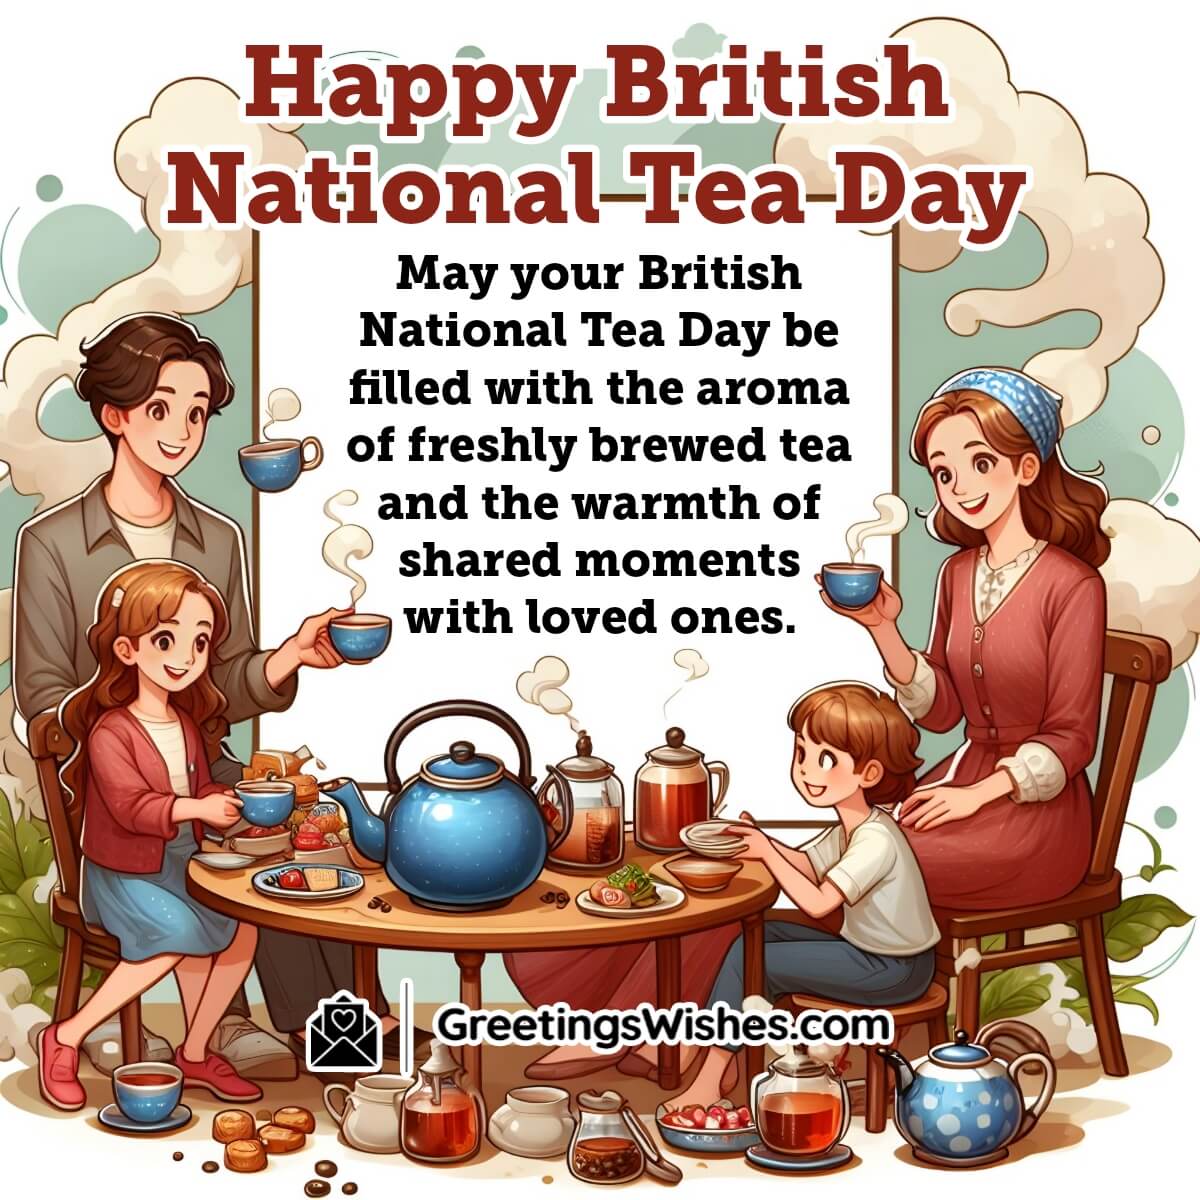 Happy British National Tea Day Wishes